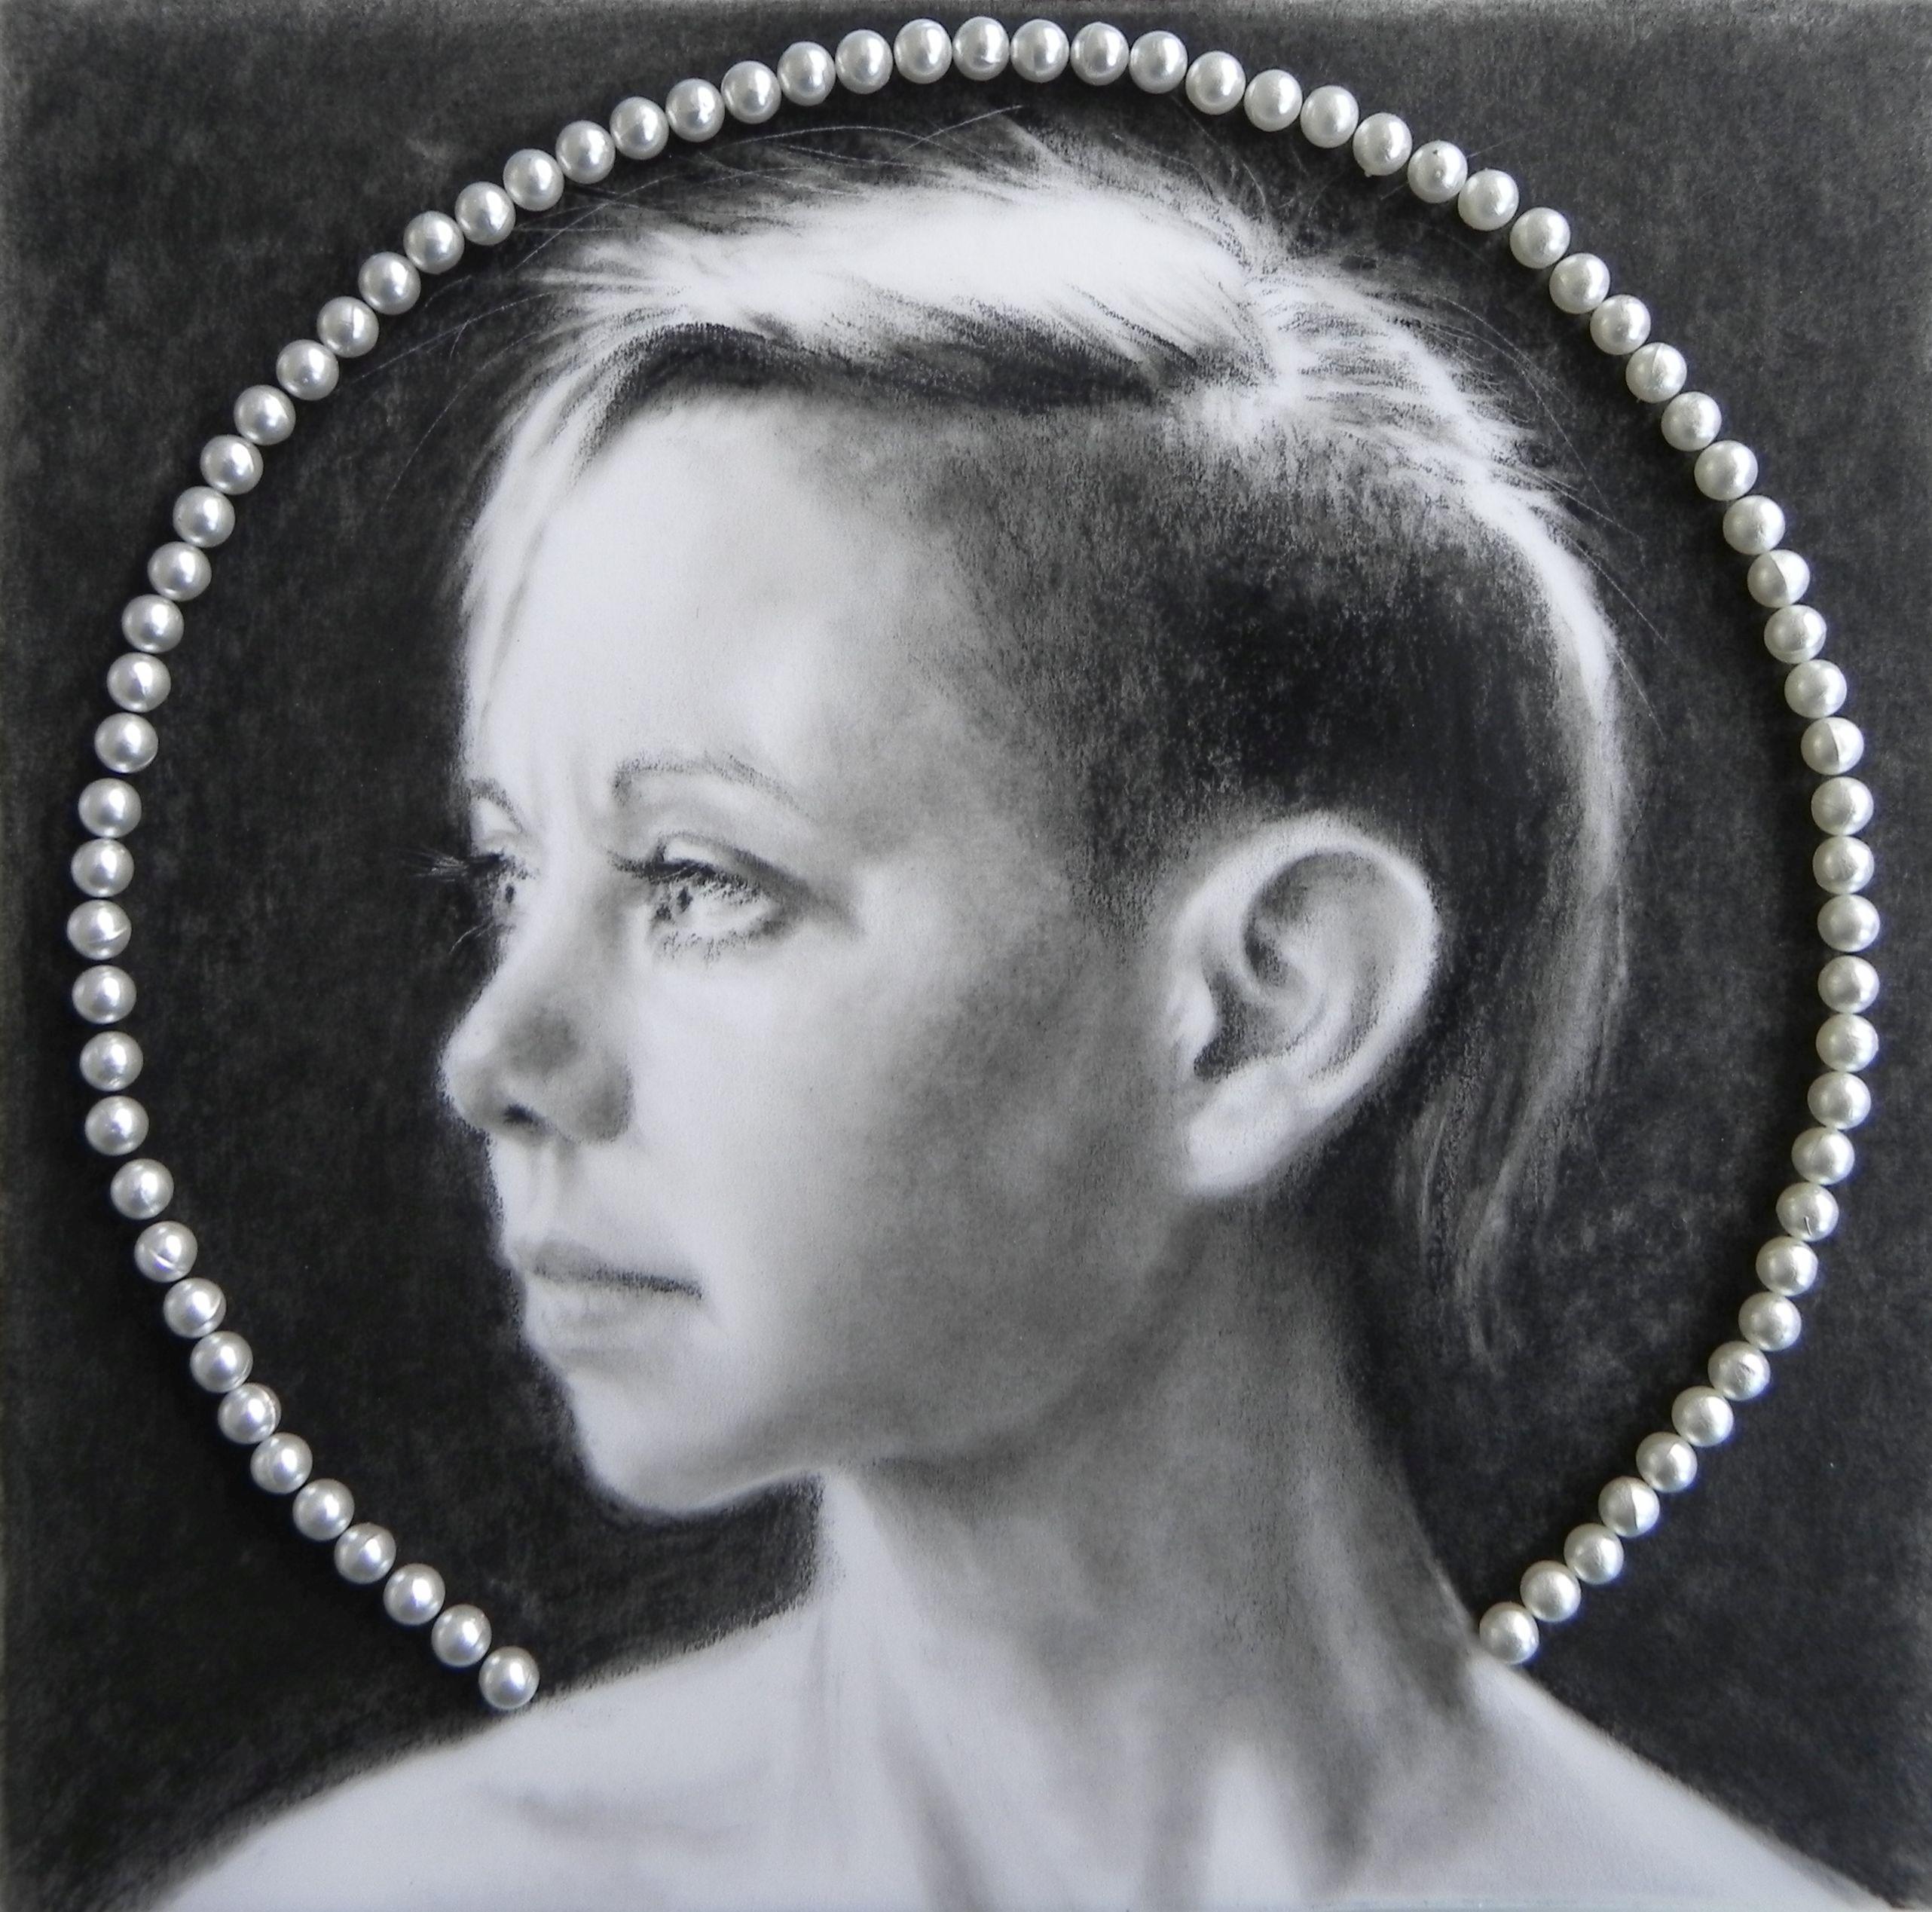 Daggi Wallace Portrait - "All Around Me Still, " Mixed Media Drawing